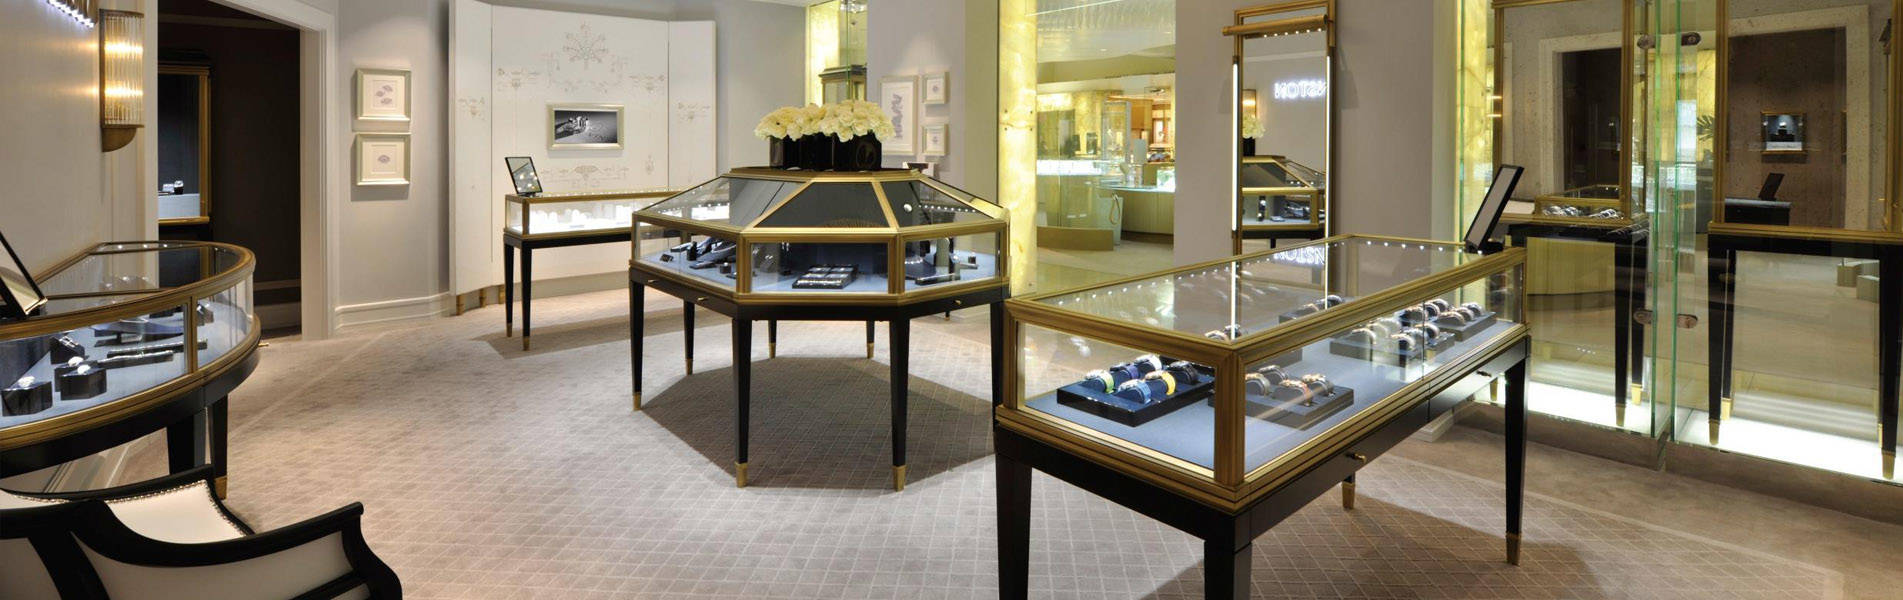 Jewelry shop interior design